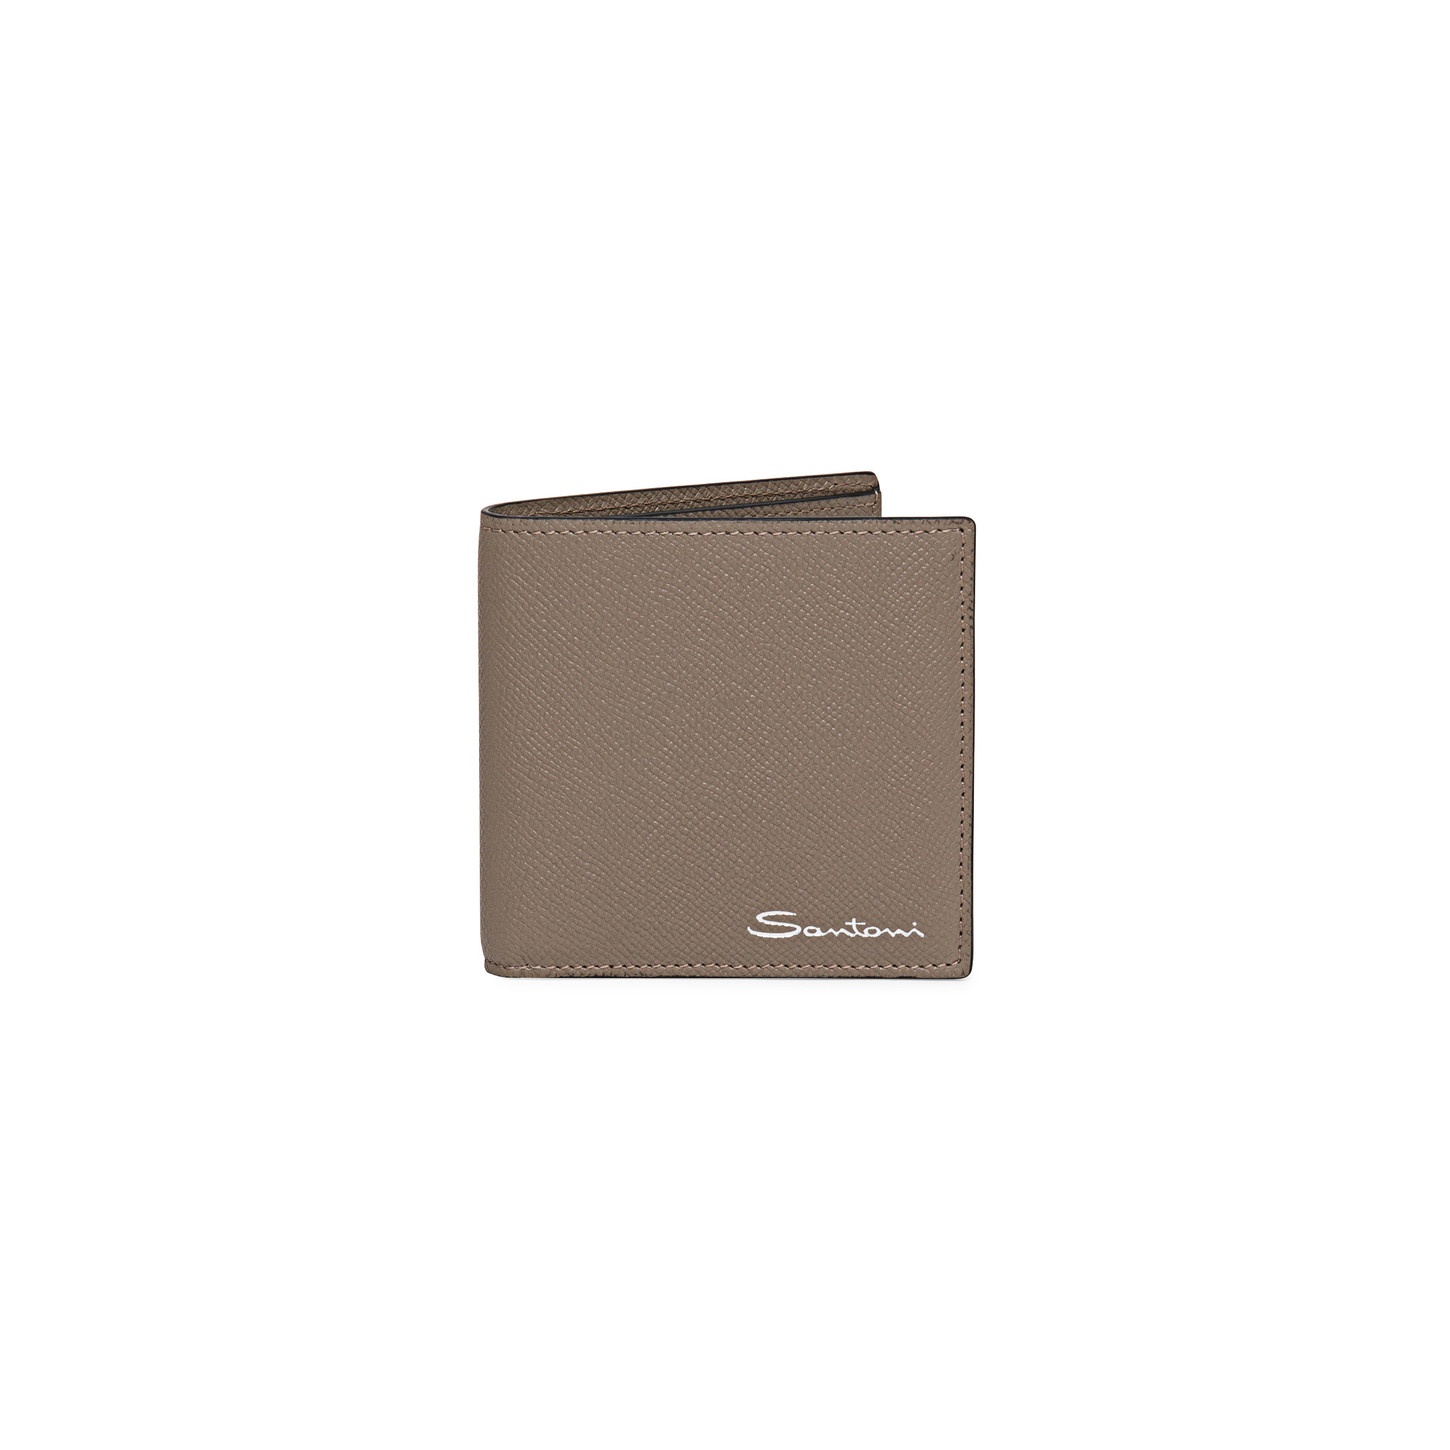 Beige saffiano leather wallet - 1